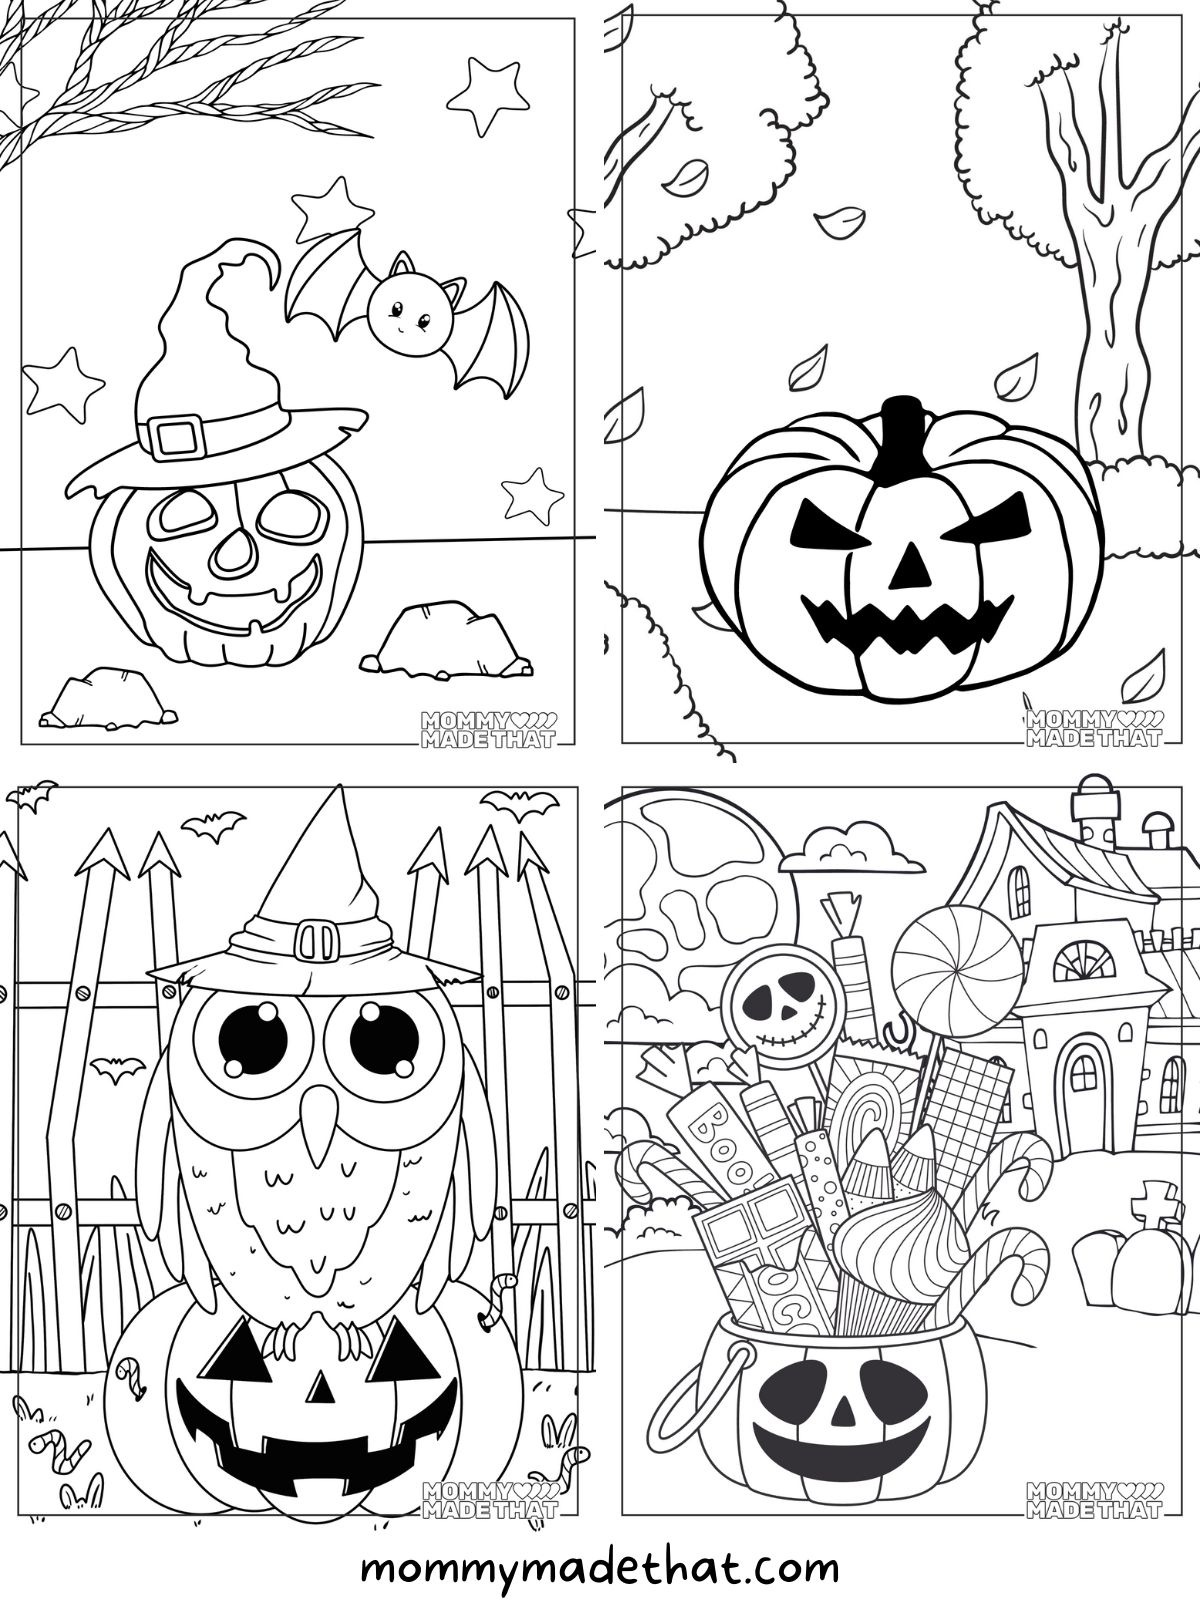 Jack o lantern coloring pages lots of fun free printables